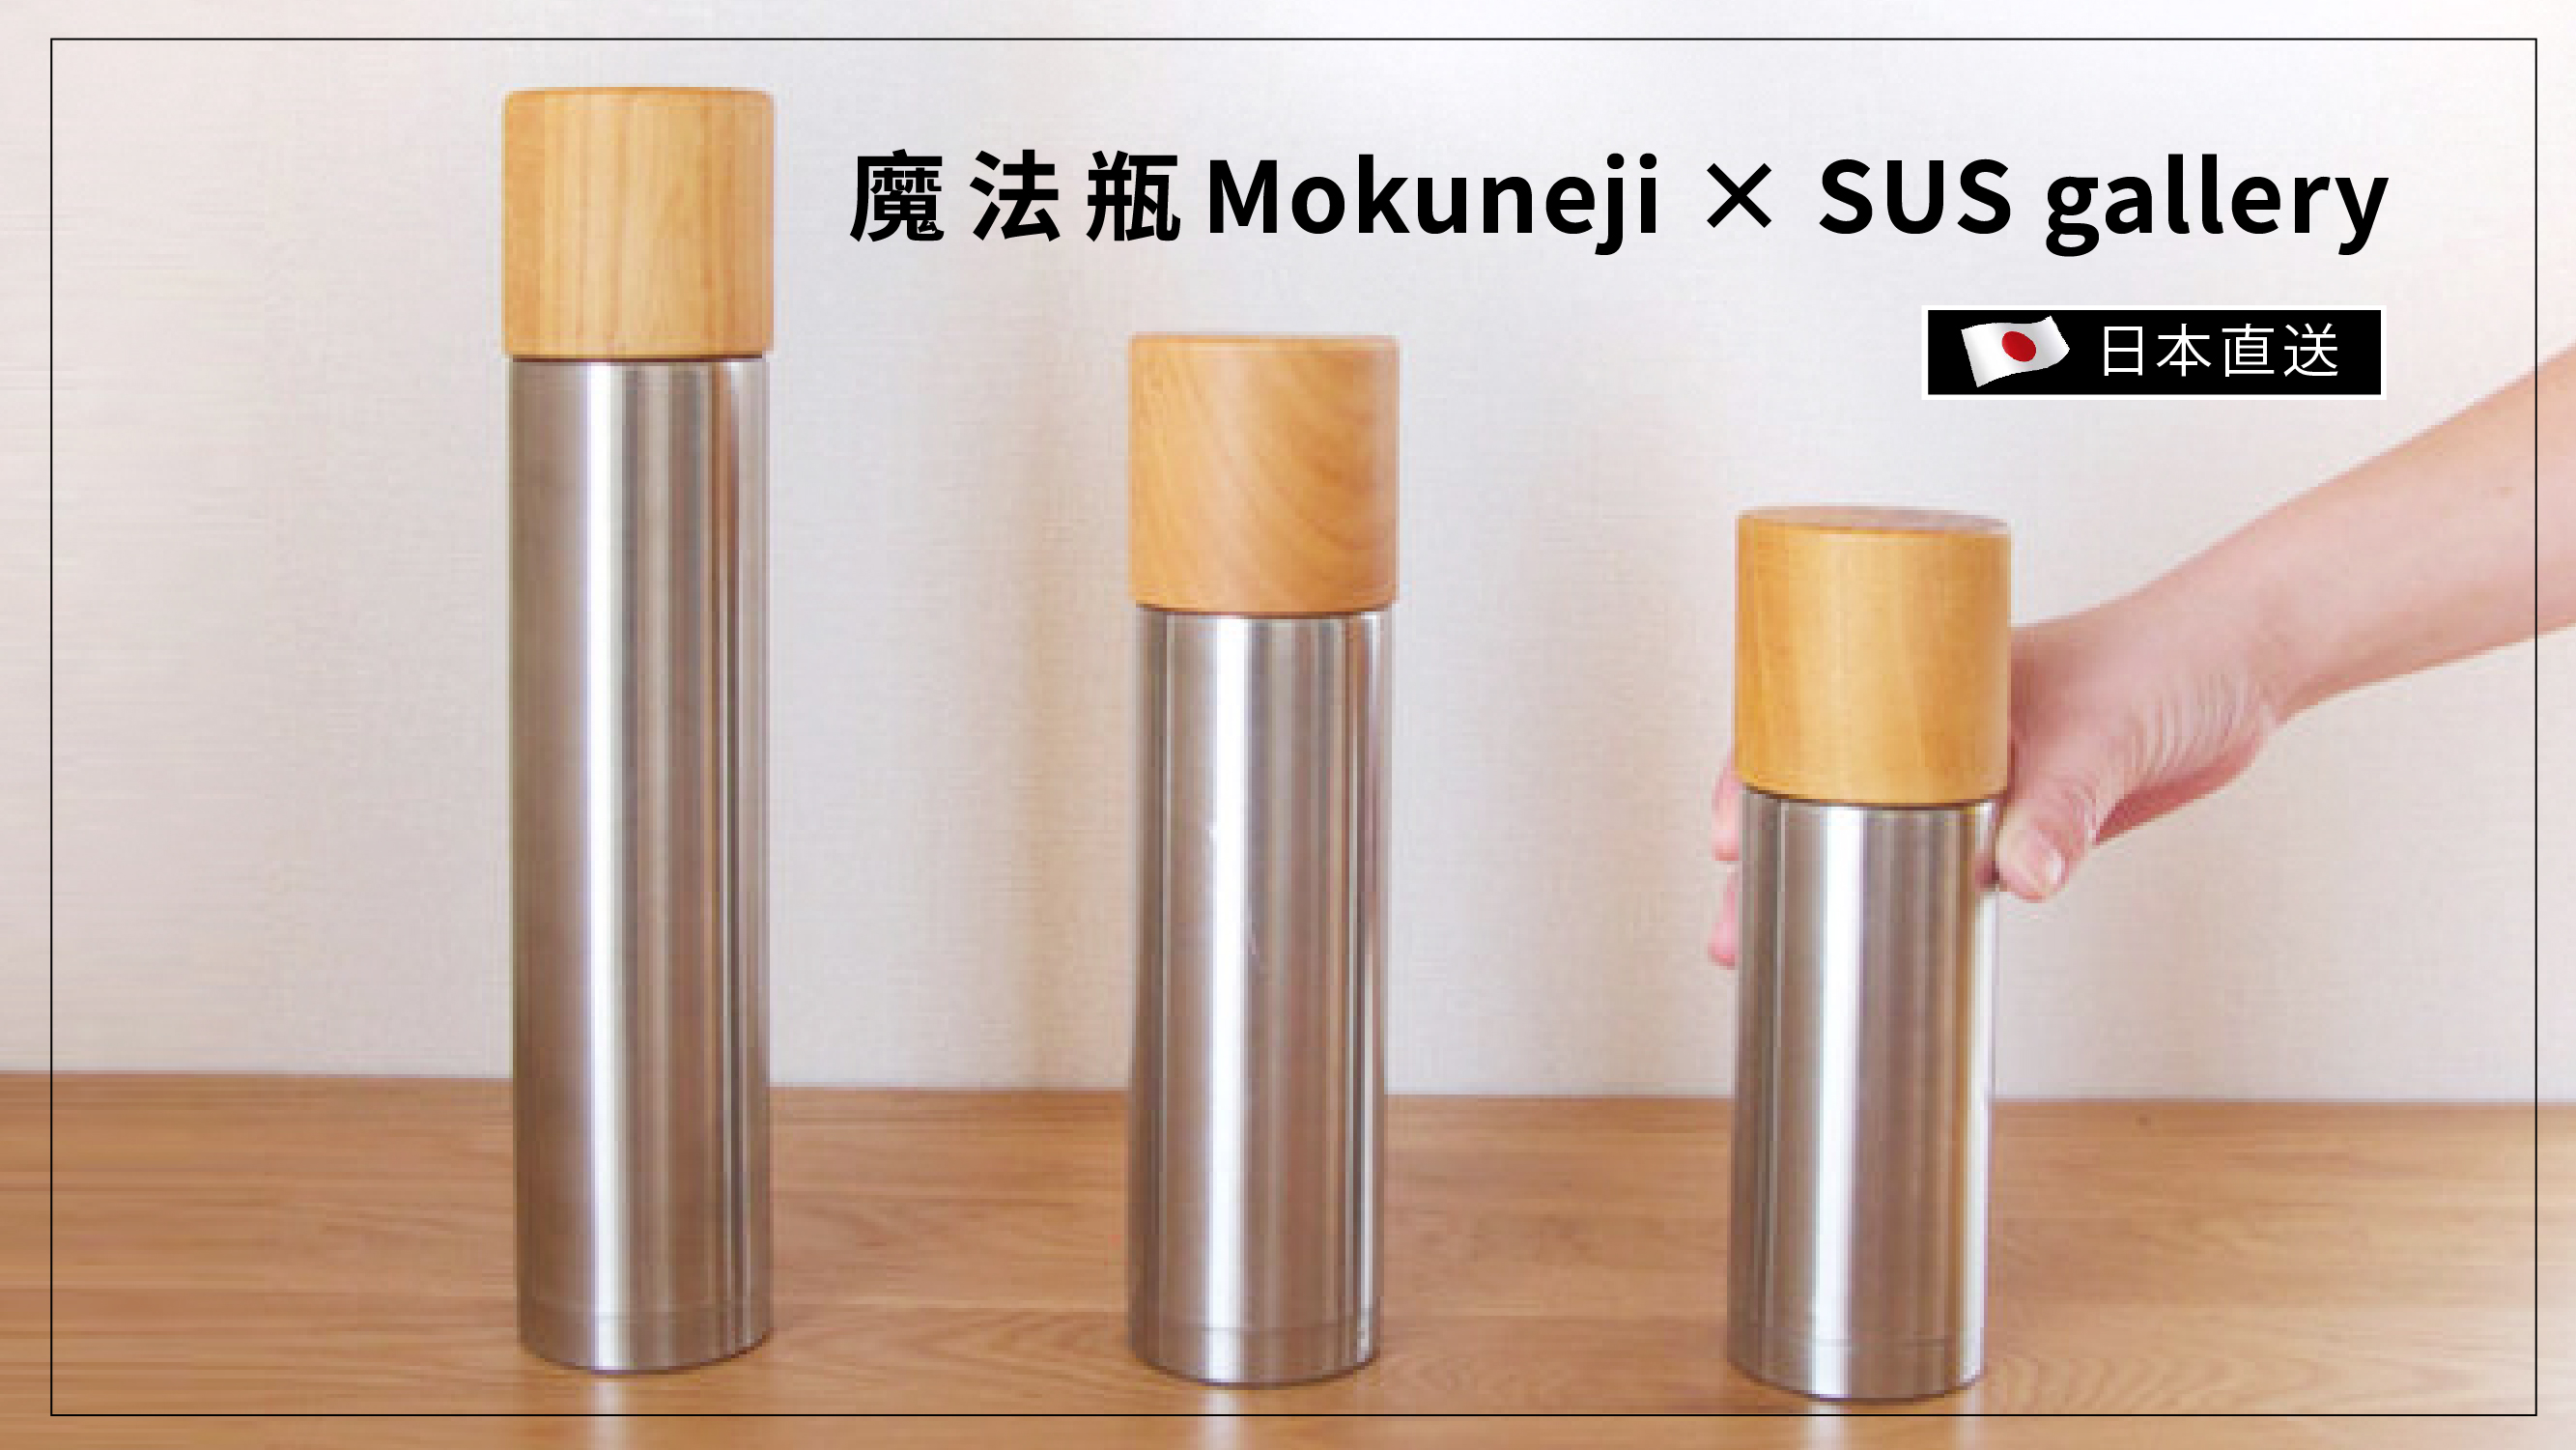 Thermal Magic Bottle Mokuneji × SUS gallery